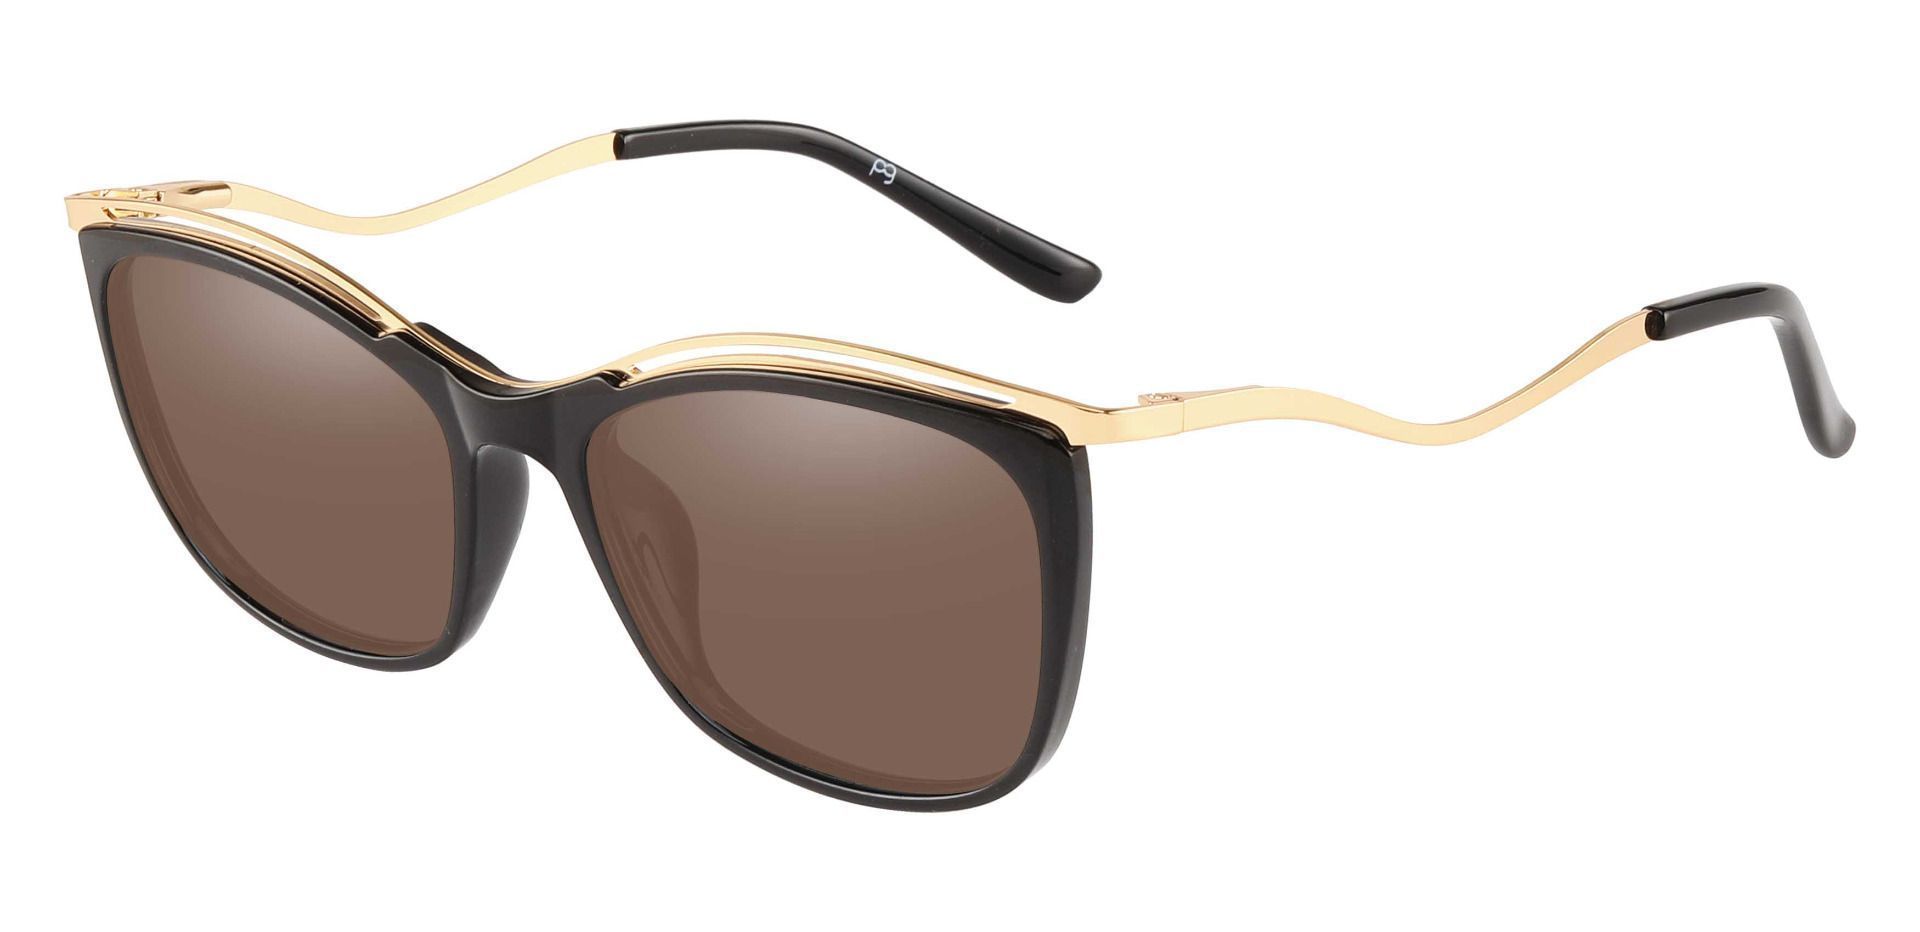 Enola Cat Eye Prescription Sunglasses - Black Frame With Brown Lenses